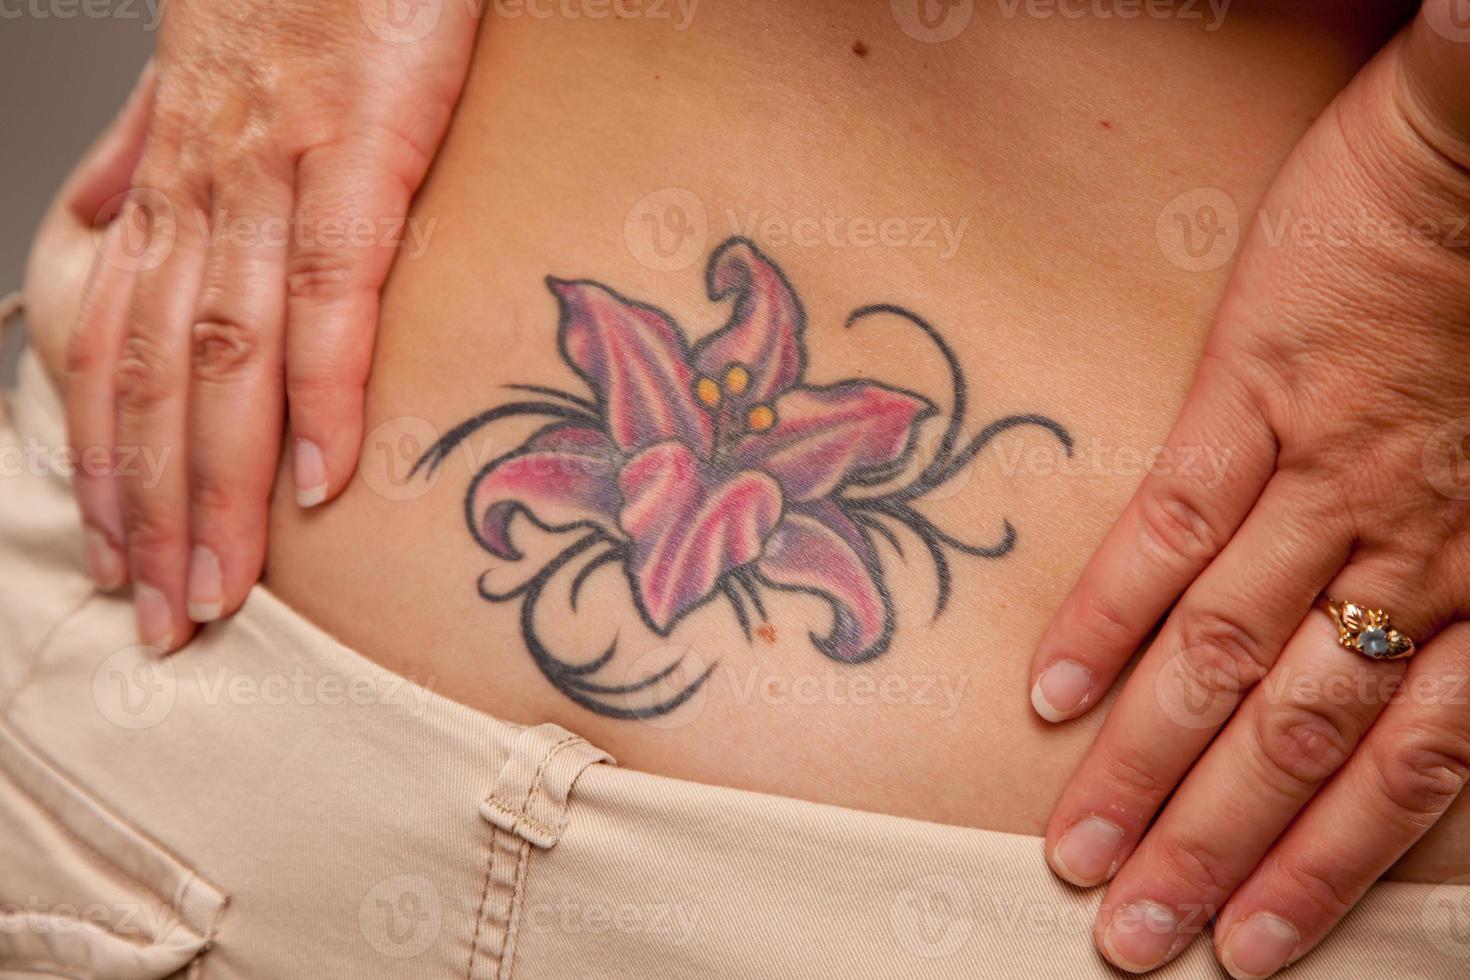 Woman showing tattoo art photo